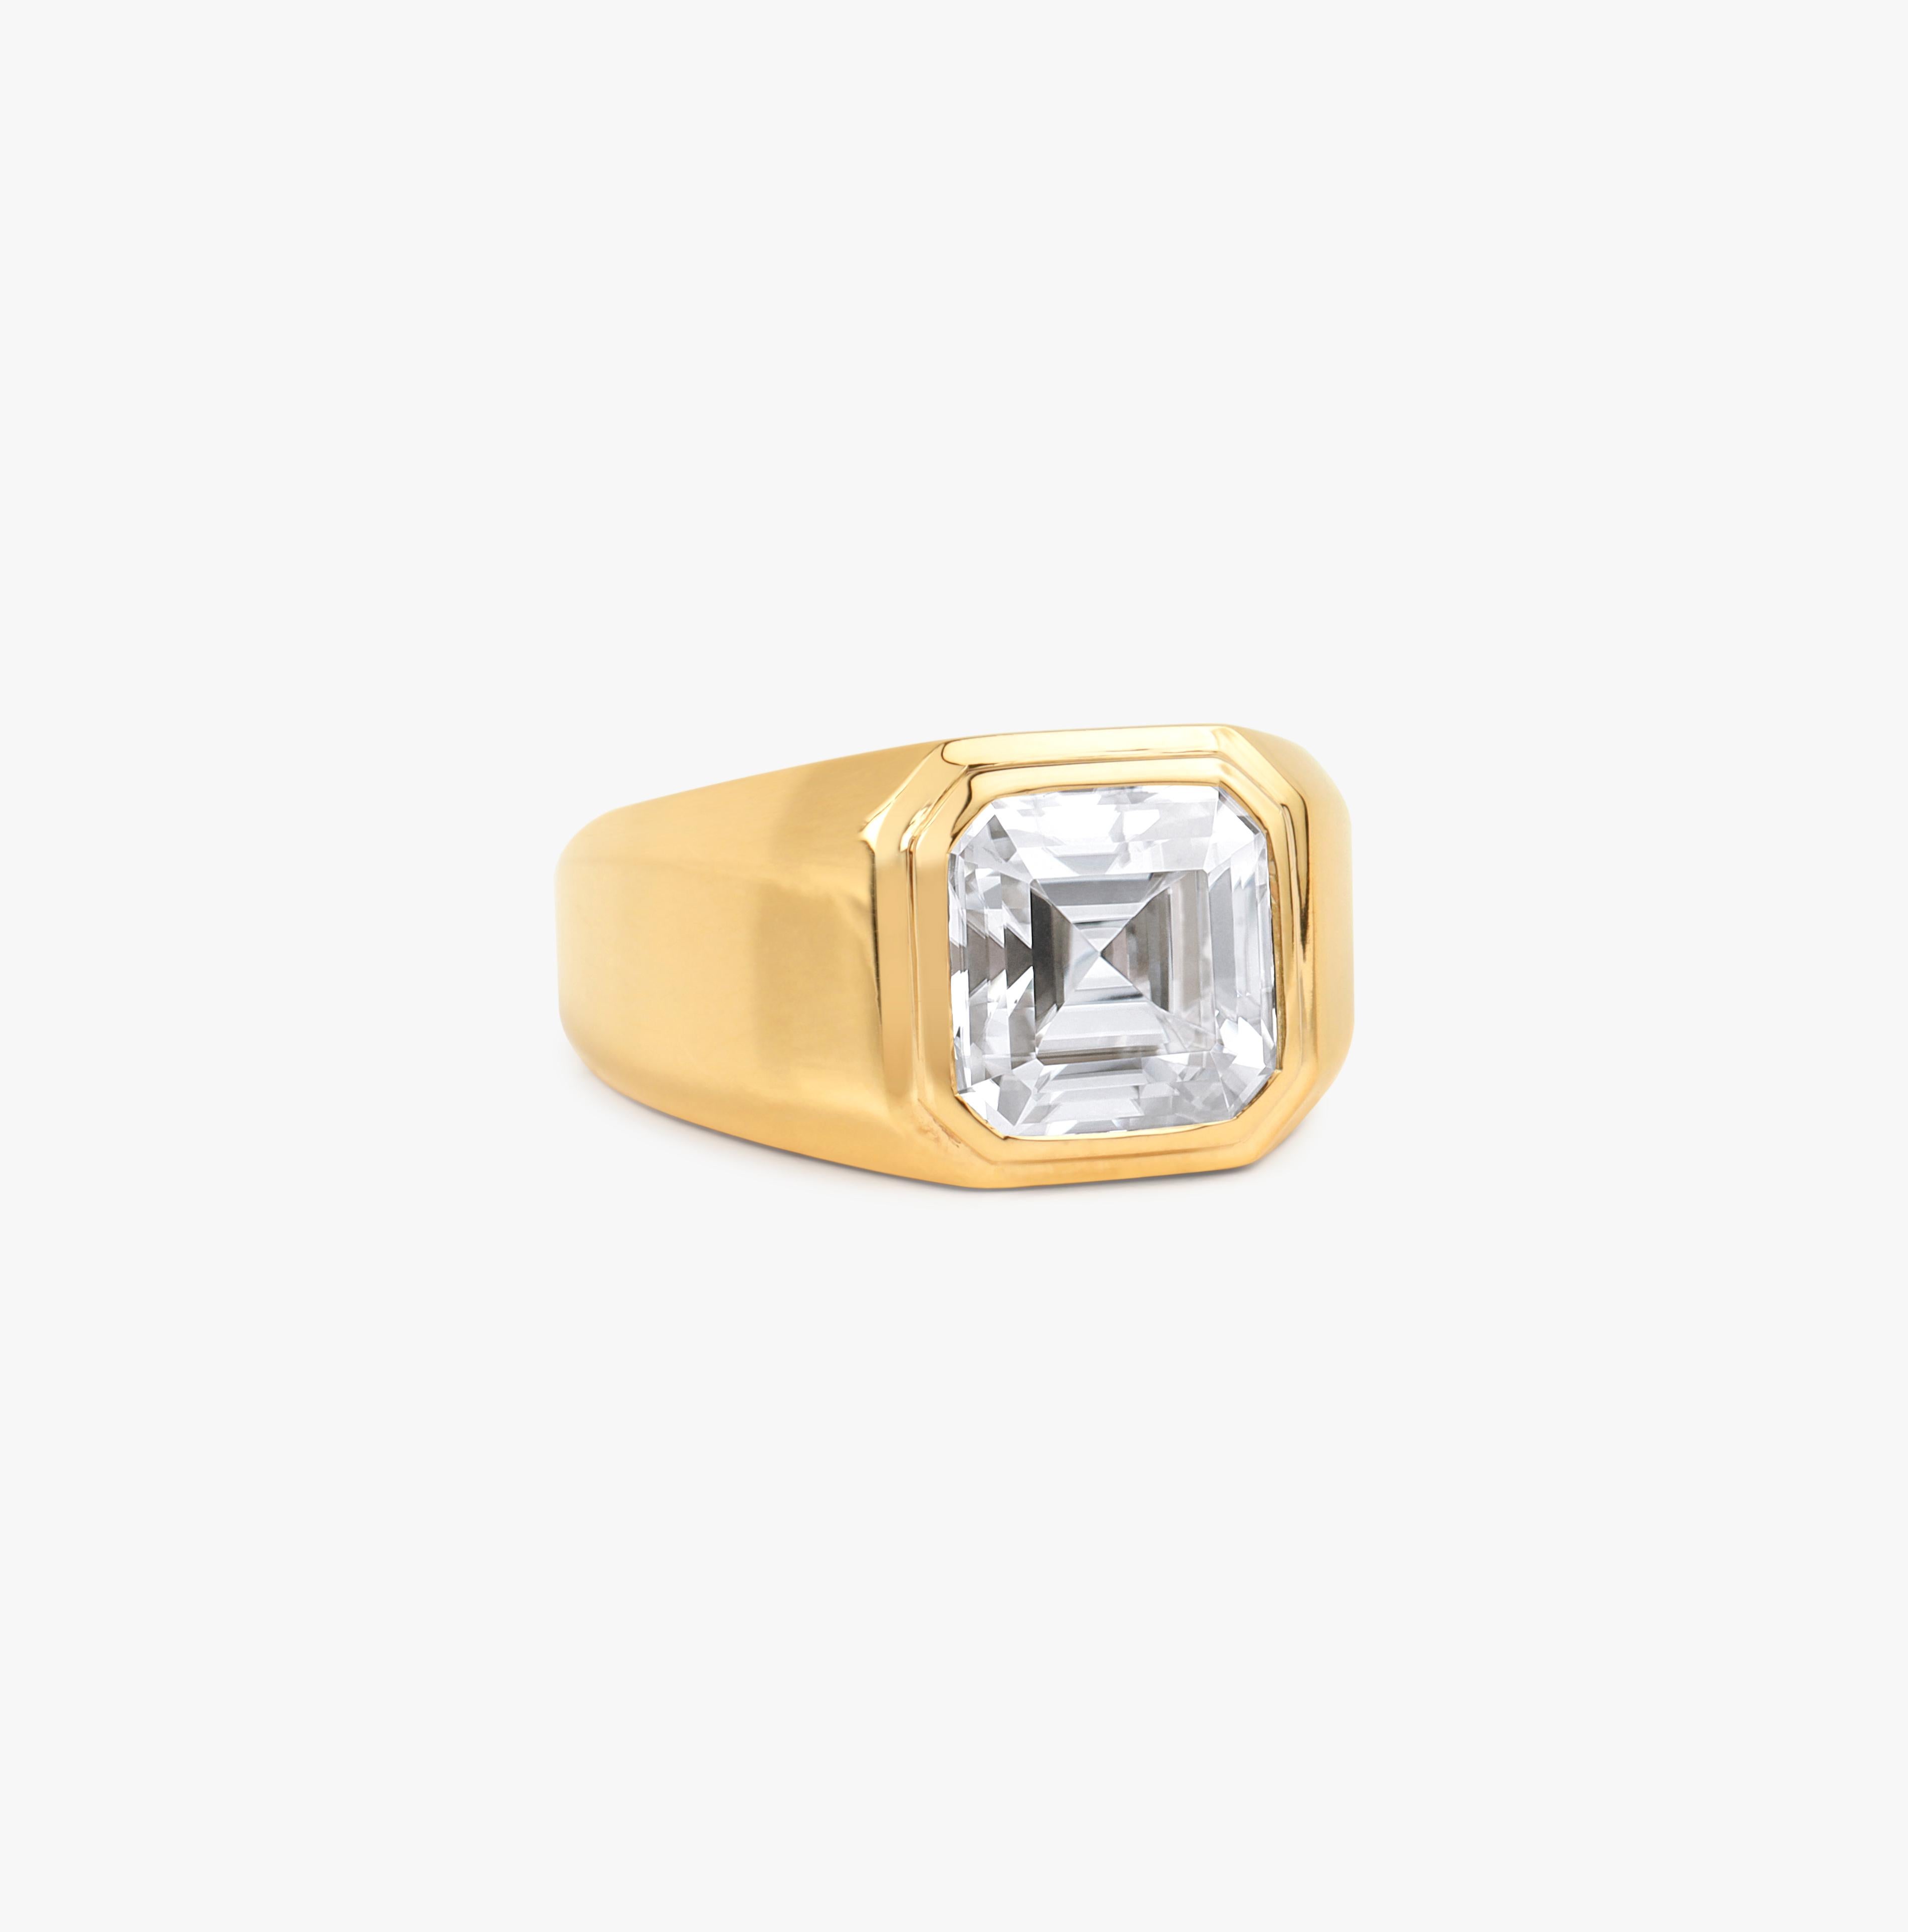 Art Deco GIA Report Certified 4 Carat Asscher Cut Diamond in 18k Yellow Gold Signet Ring  For Sale